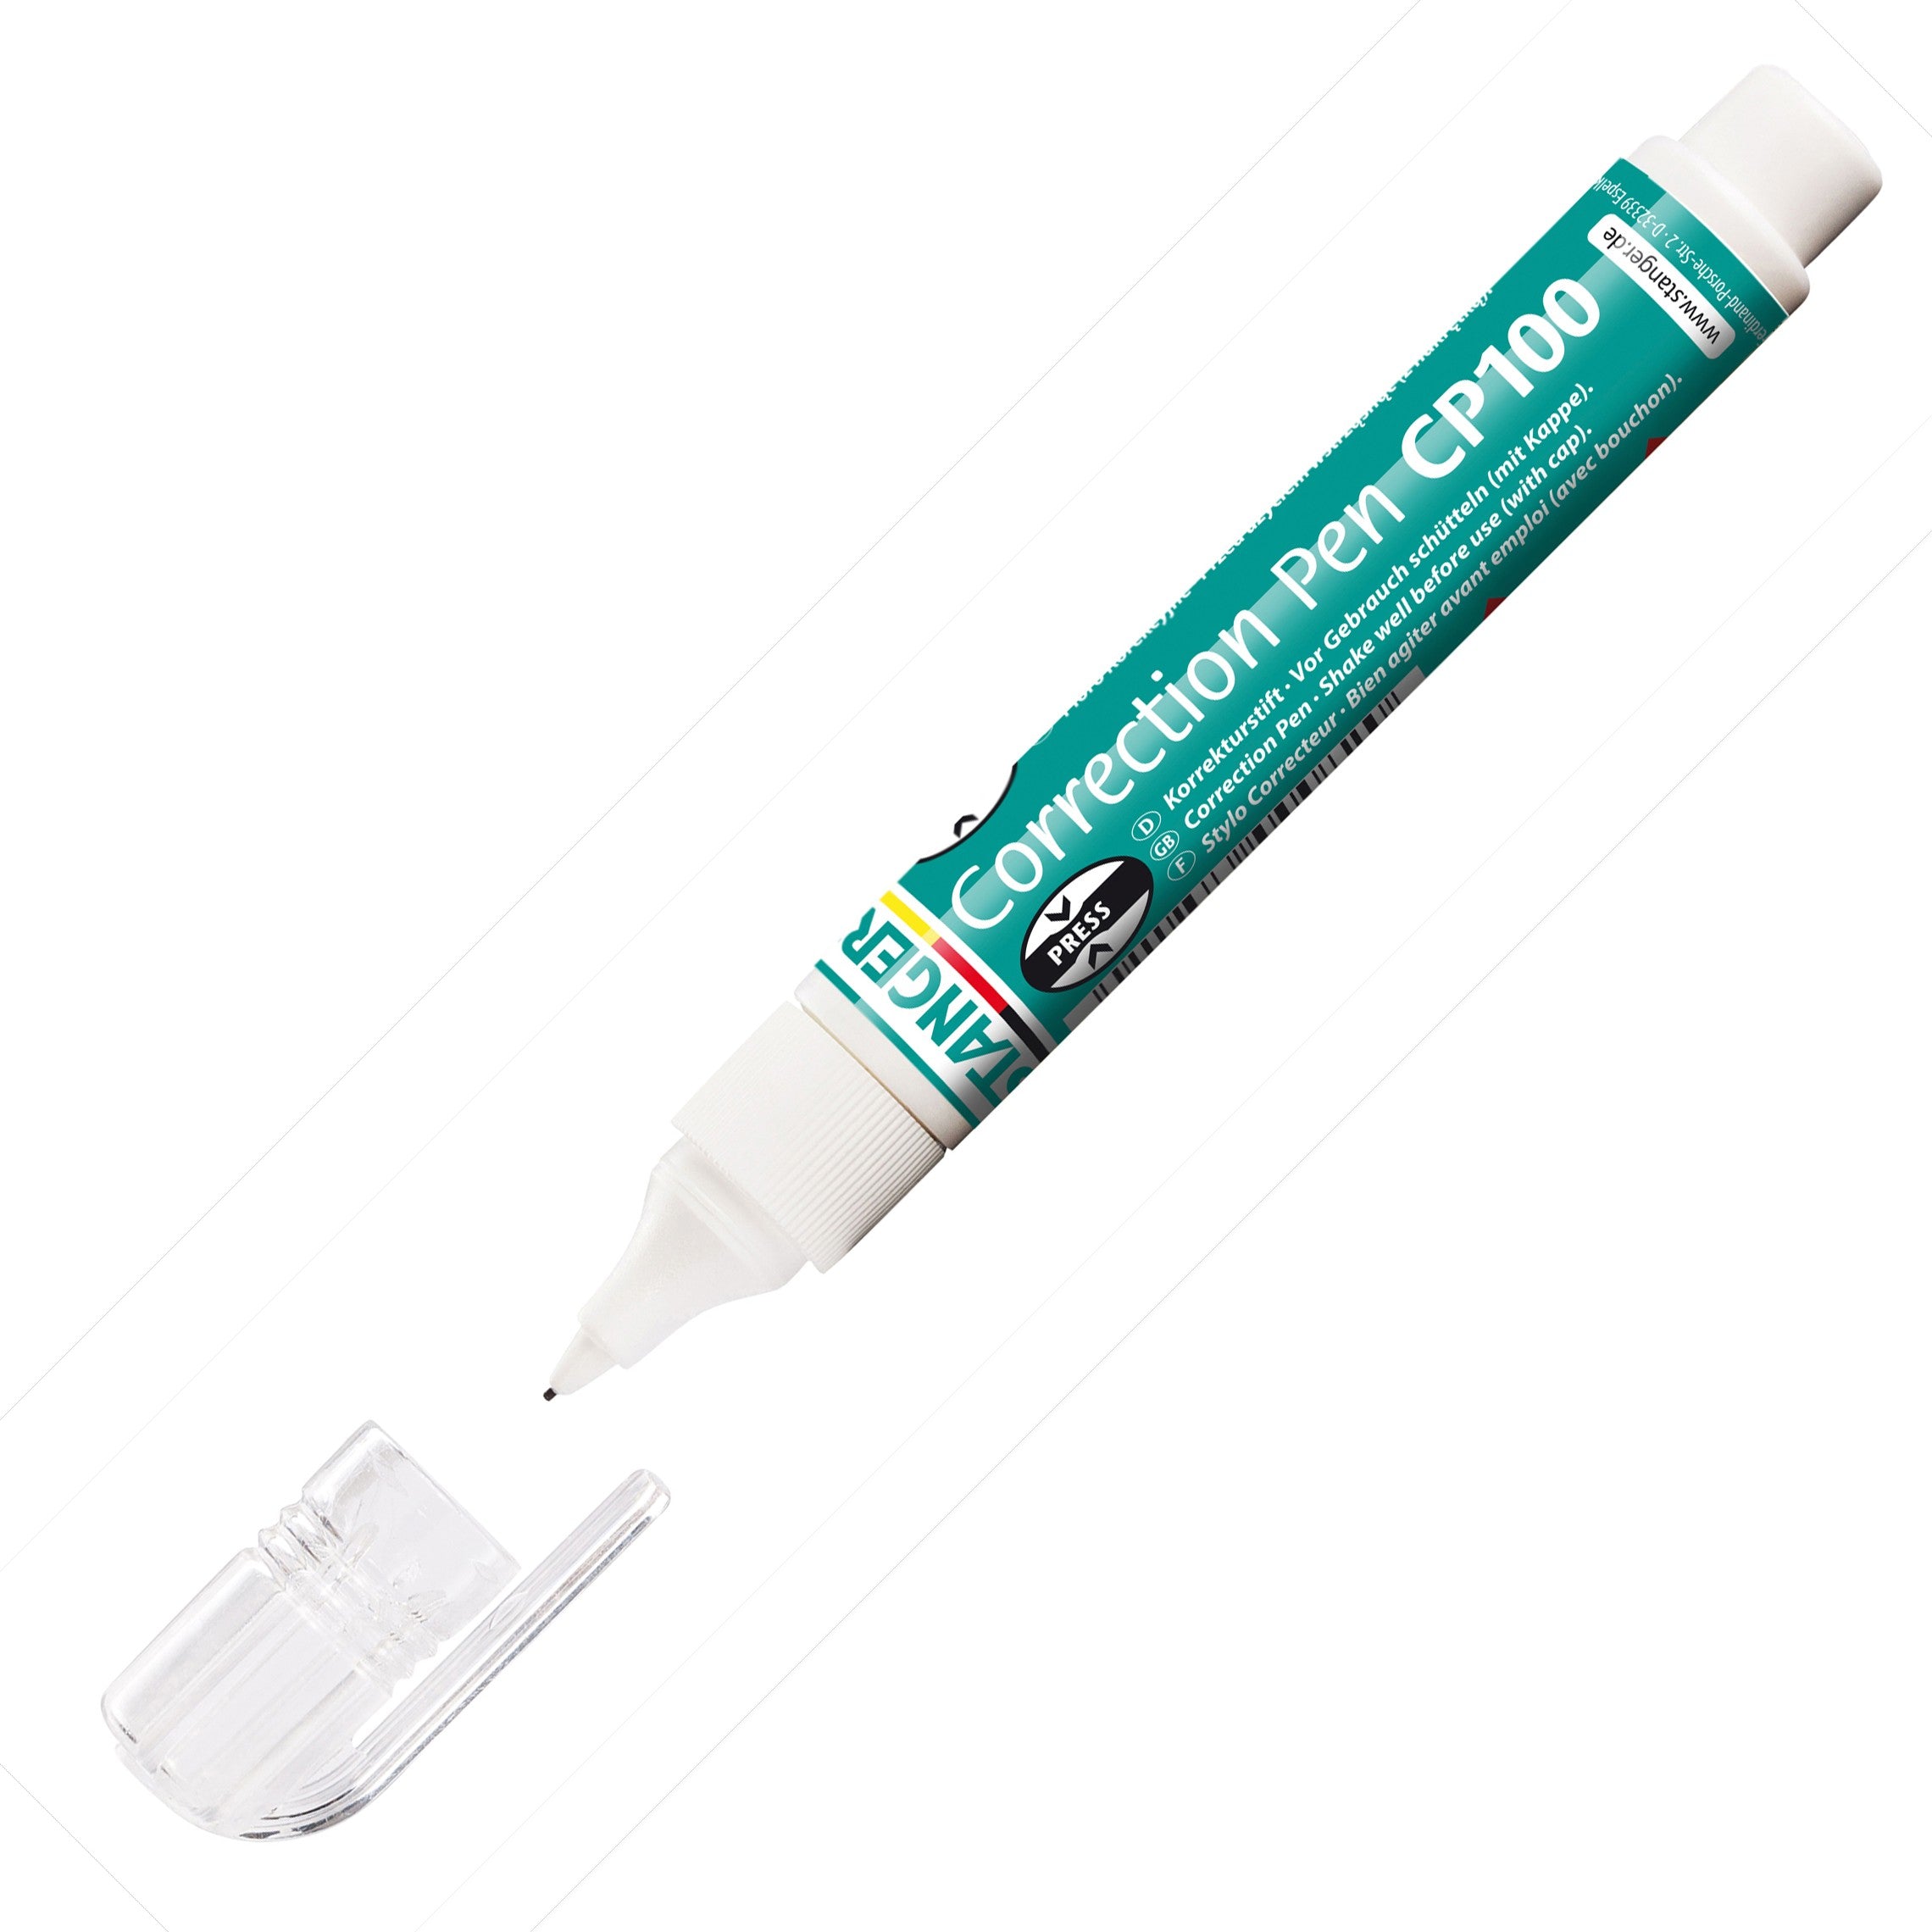 Stanger - Correction pen CP100 - 7 ml